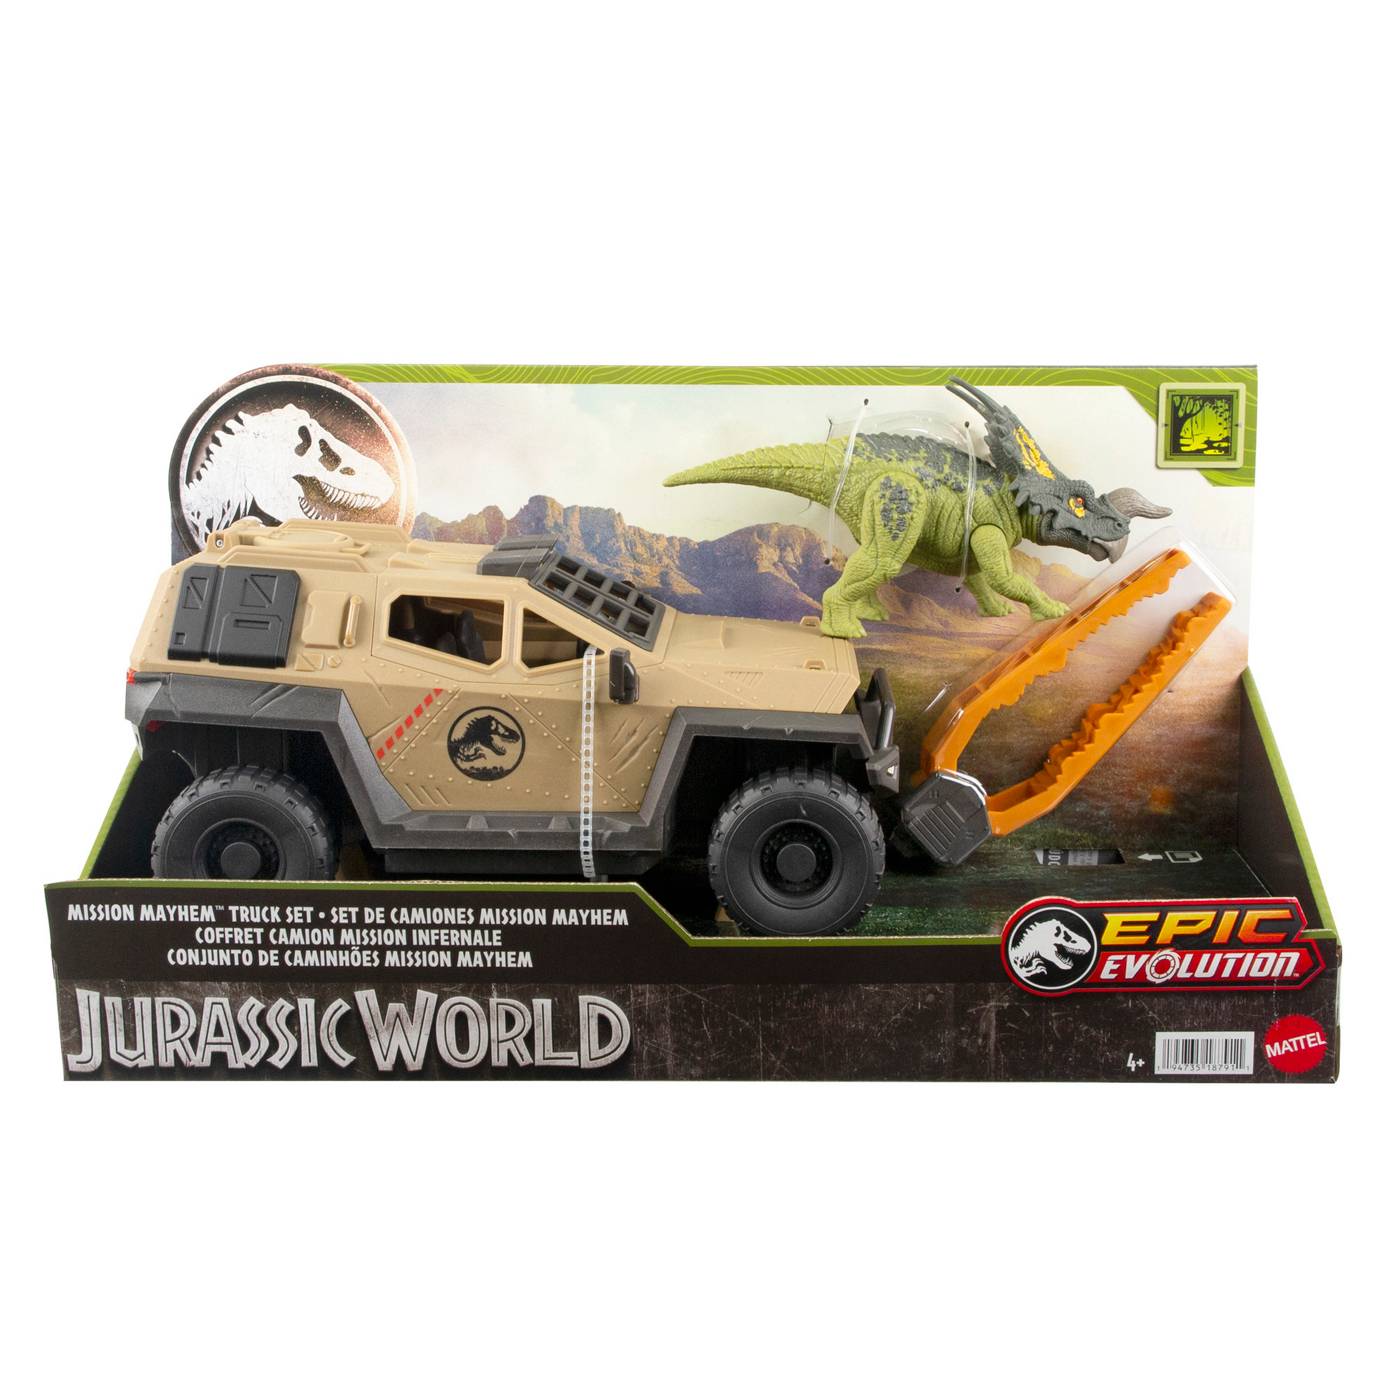 Jurassic World Mission Mayhem Truck Set; image 1 of 3